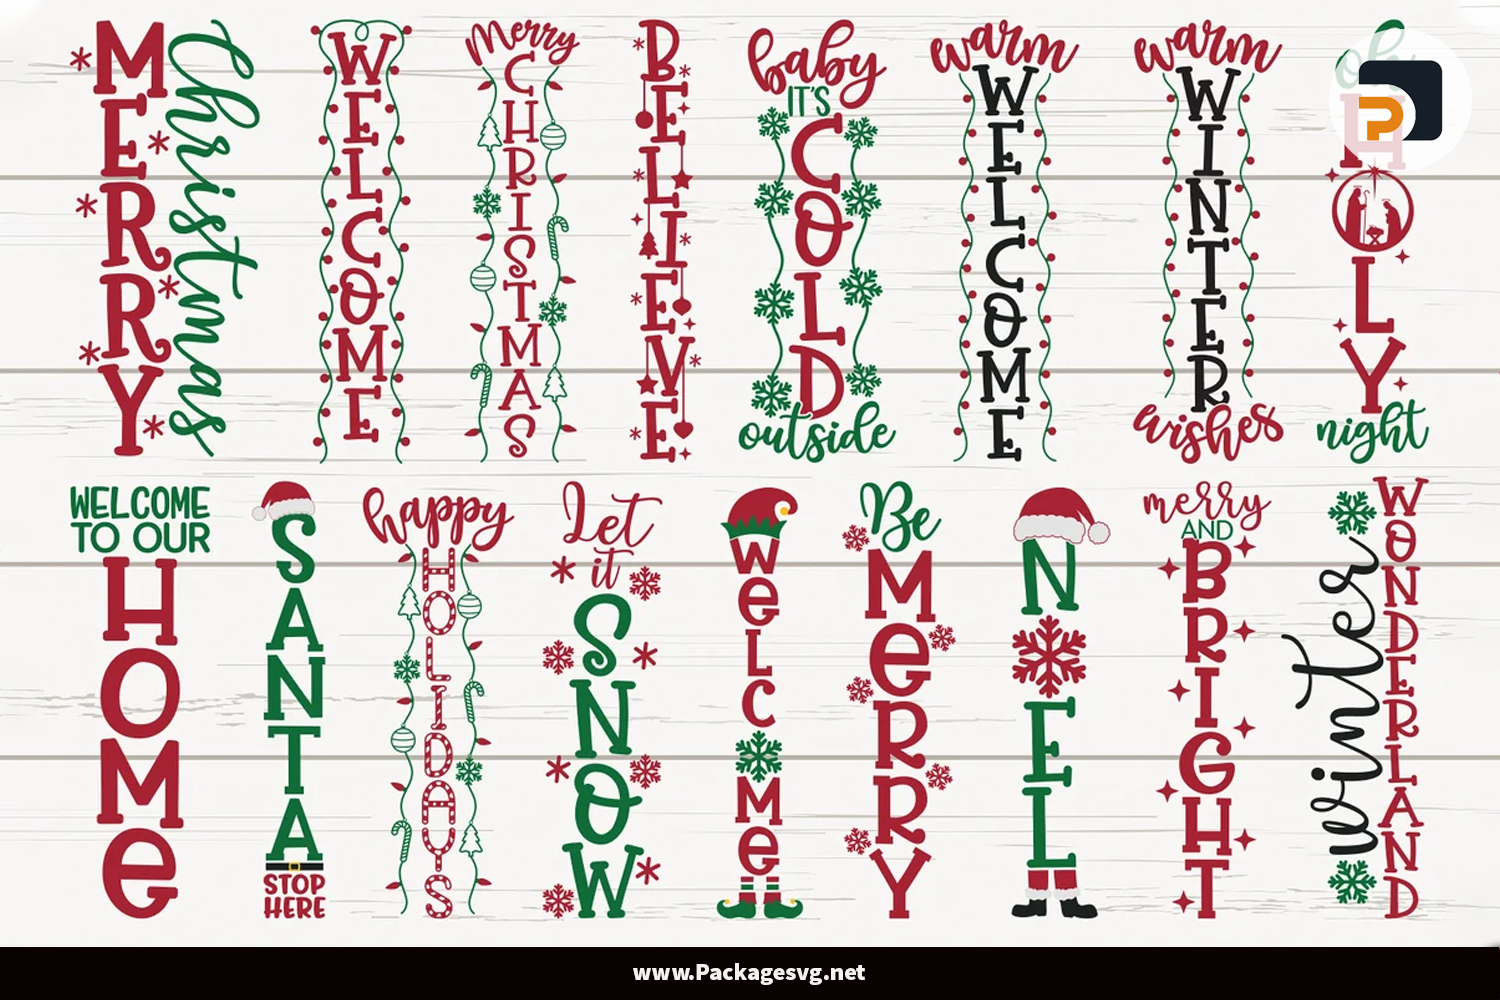 Christmas Porch Signs SVG Bundle